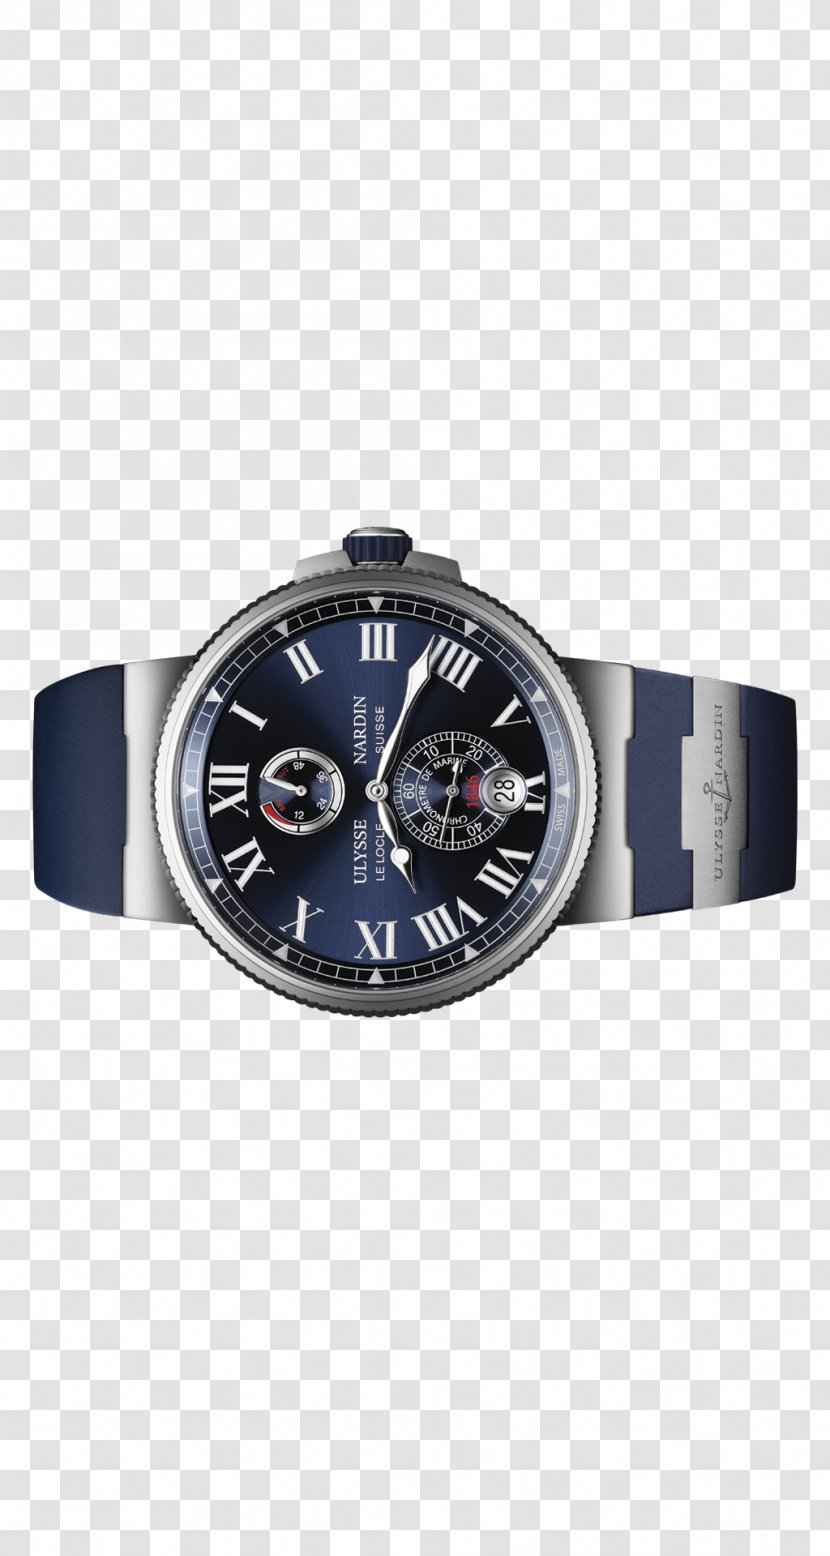 Ulysse Nardin Watch Strap Marine Chronometer Швейцарские часы Transparent PNG